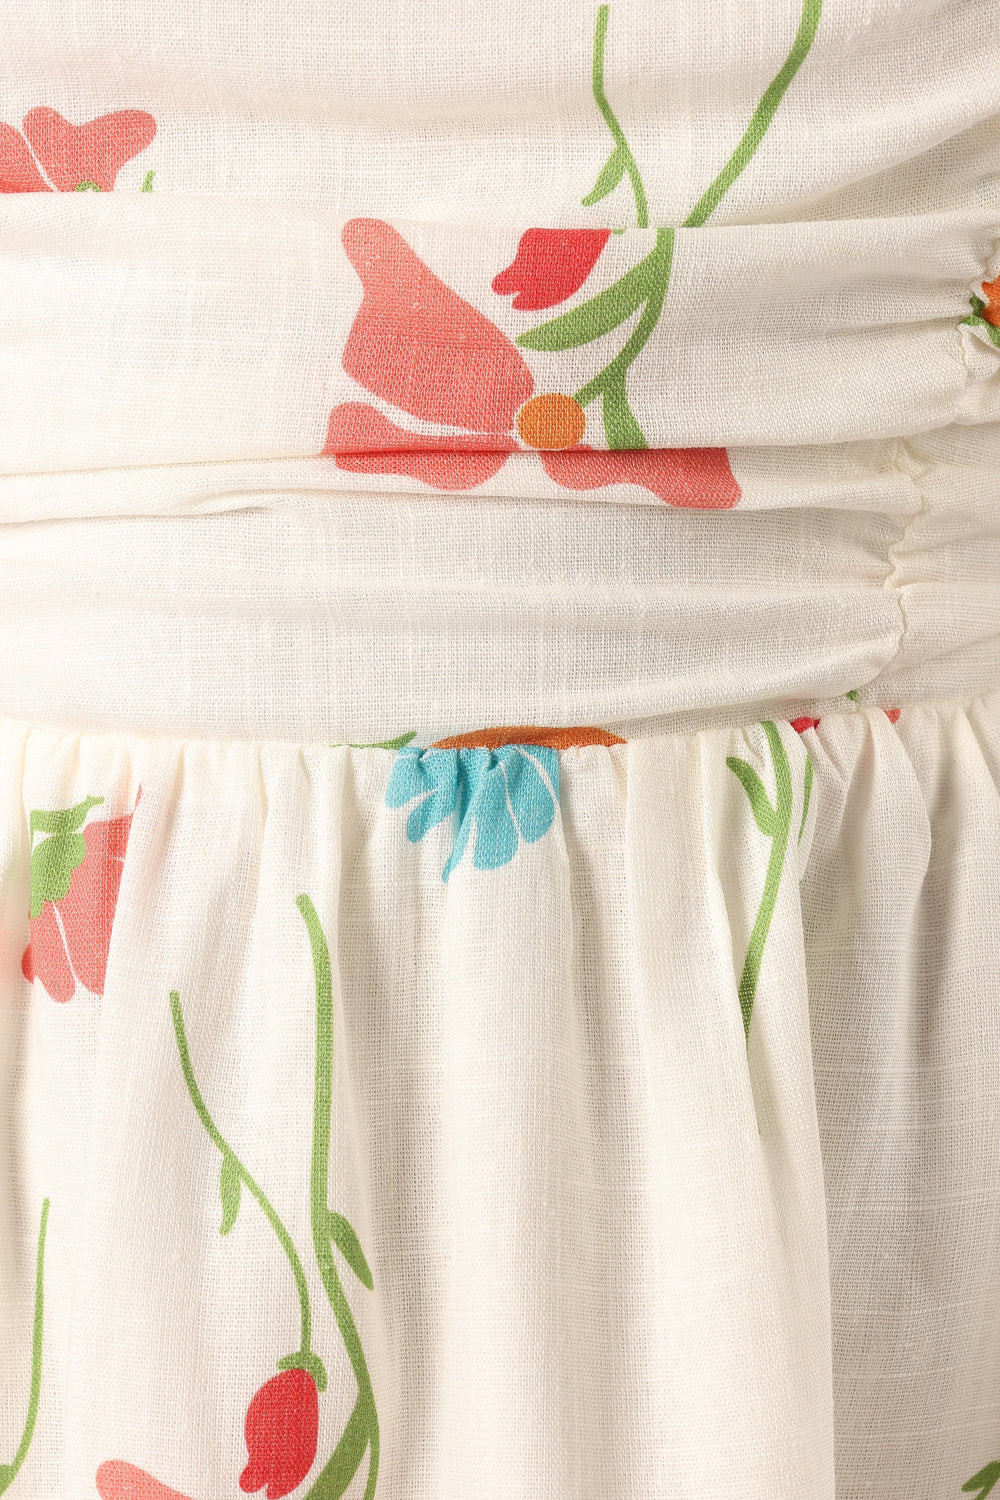 DRESSES @Callia Mini Dress - Multi Floral